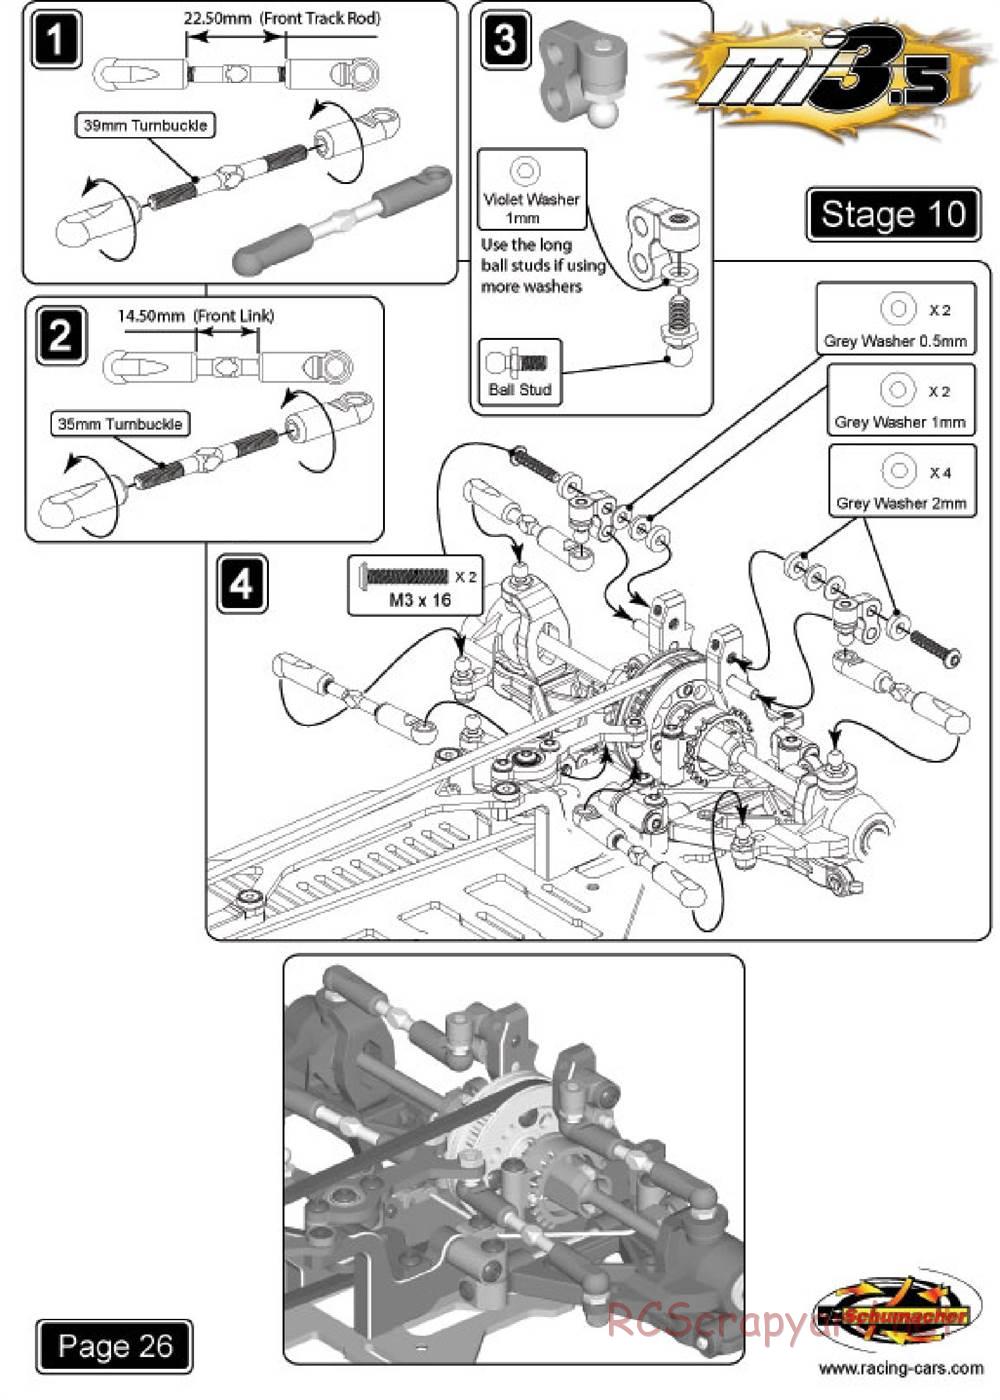 Schumacher - Mi3.5 - Manual - Page 27